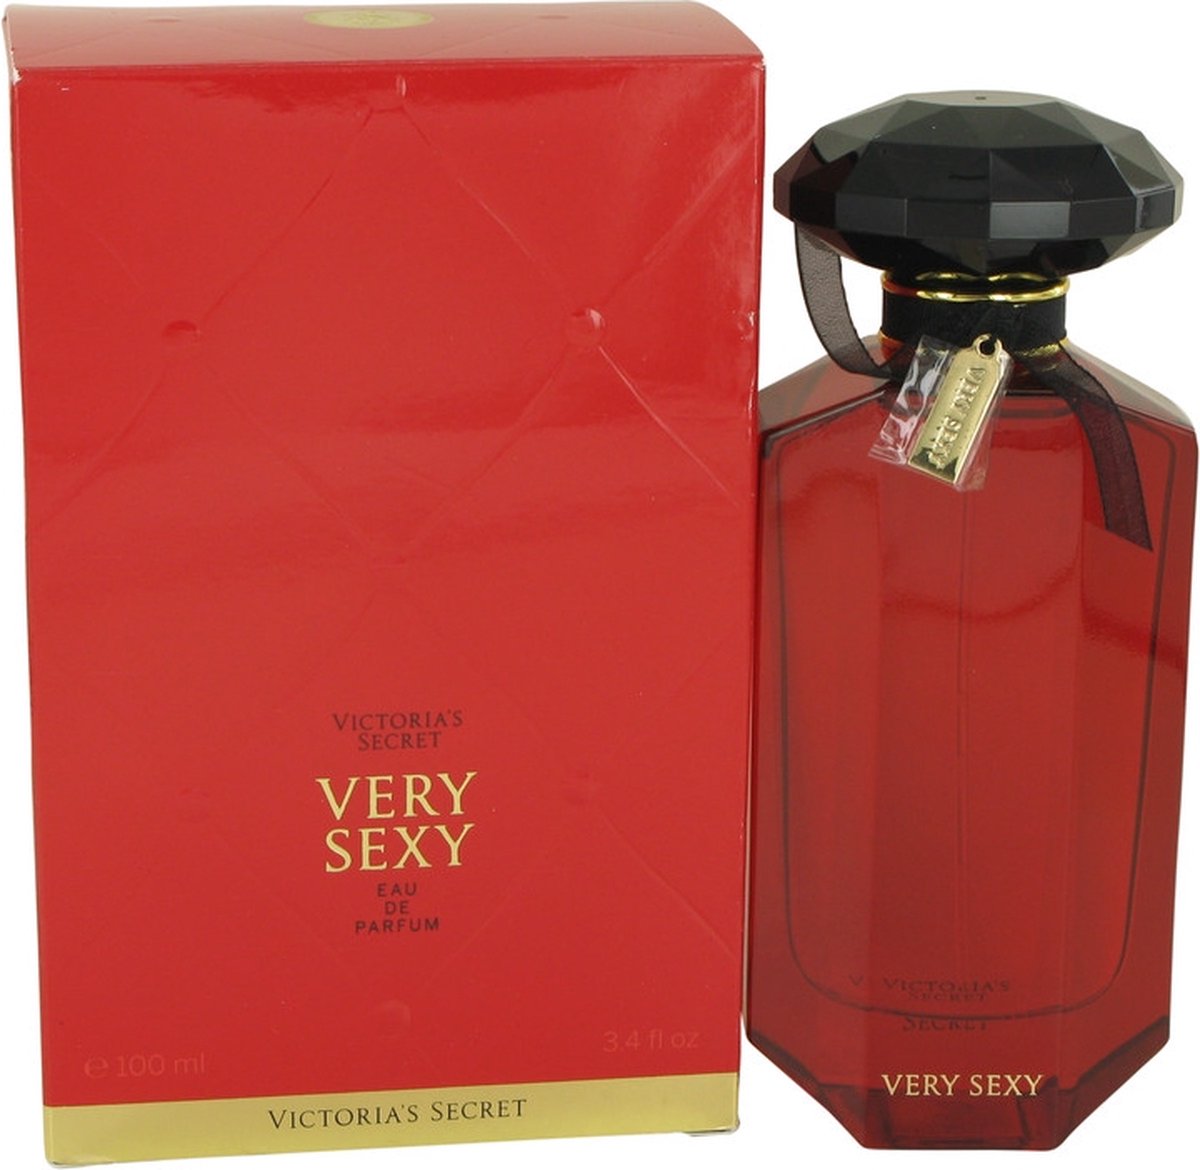 Victoria's Secret Very Sexy - Eau de parfum spray - 100 ml